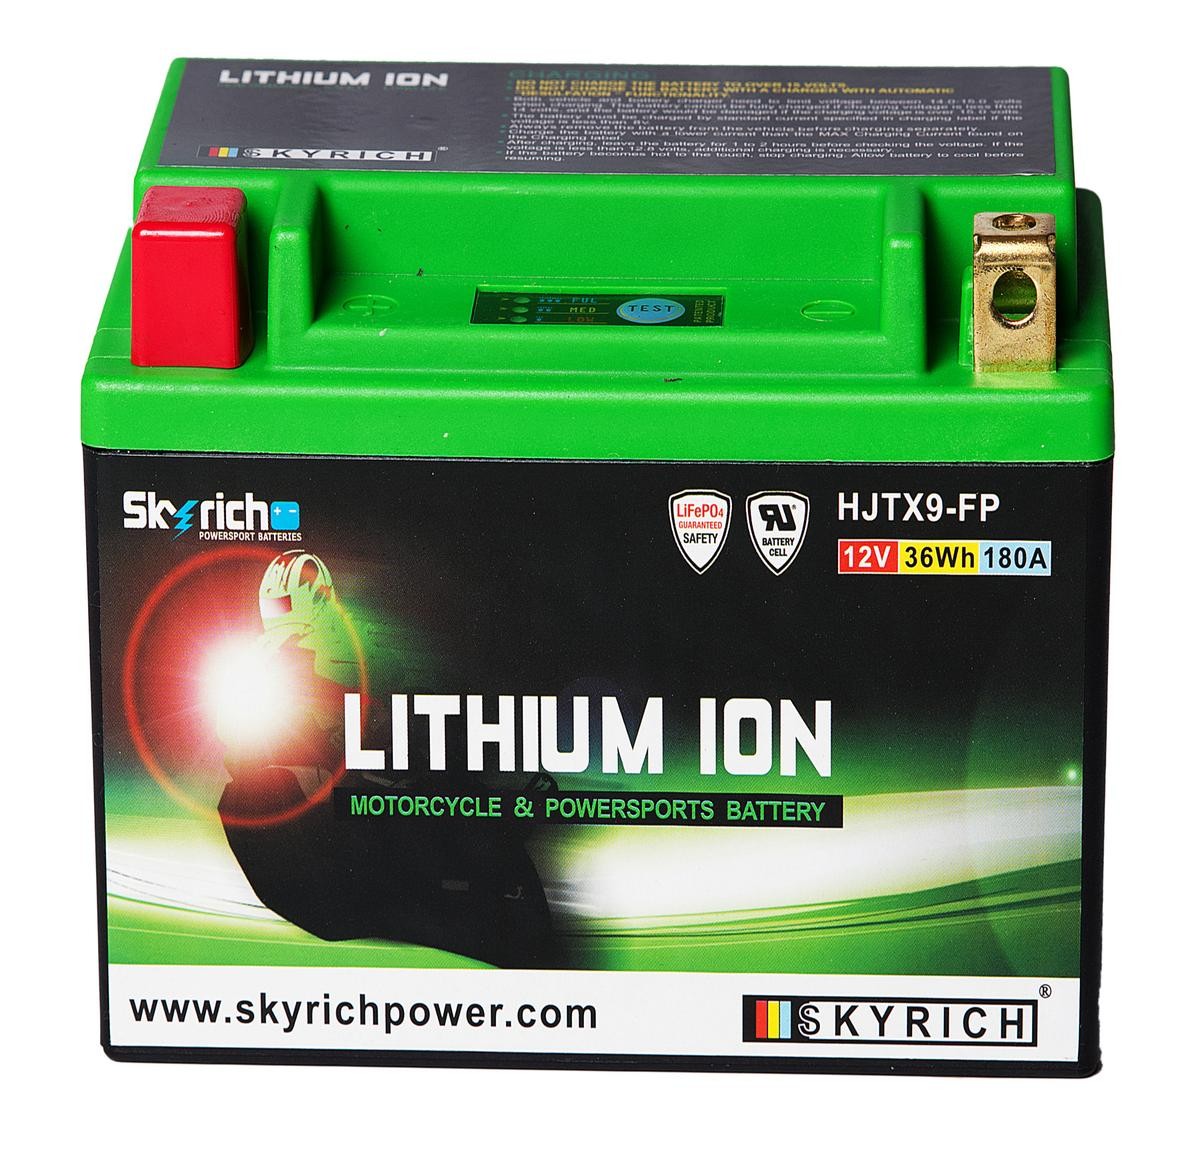 SKYRICH LITHIUM ION Batterie 12V 3Ah 180A N Li-Ionen-Batterie HJTX9-FP VESPA Mofa Maxi-Scooter